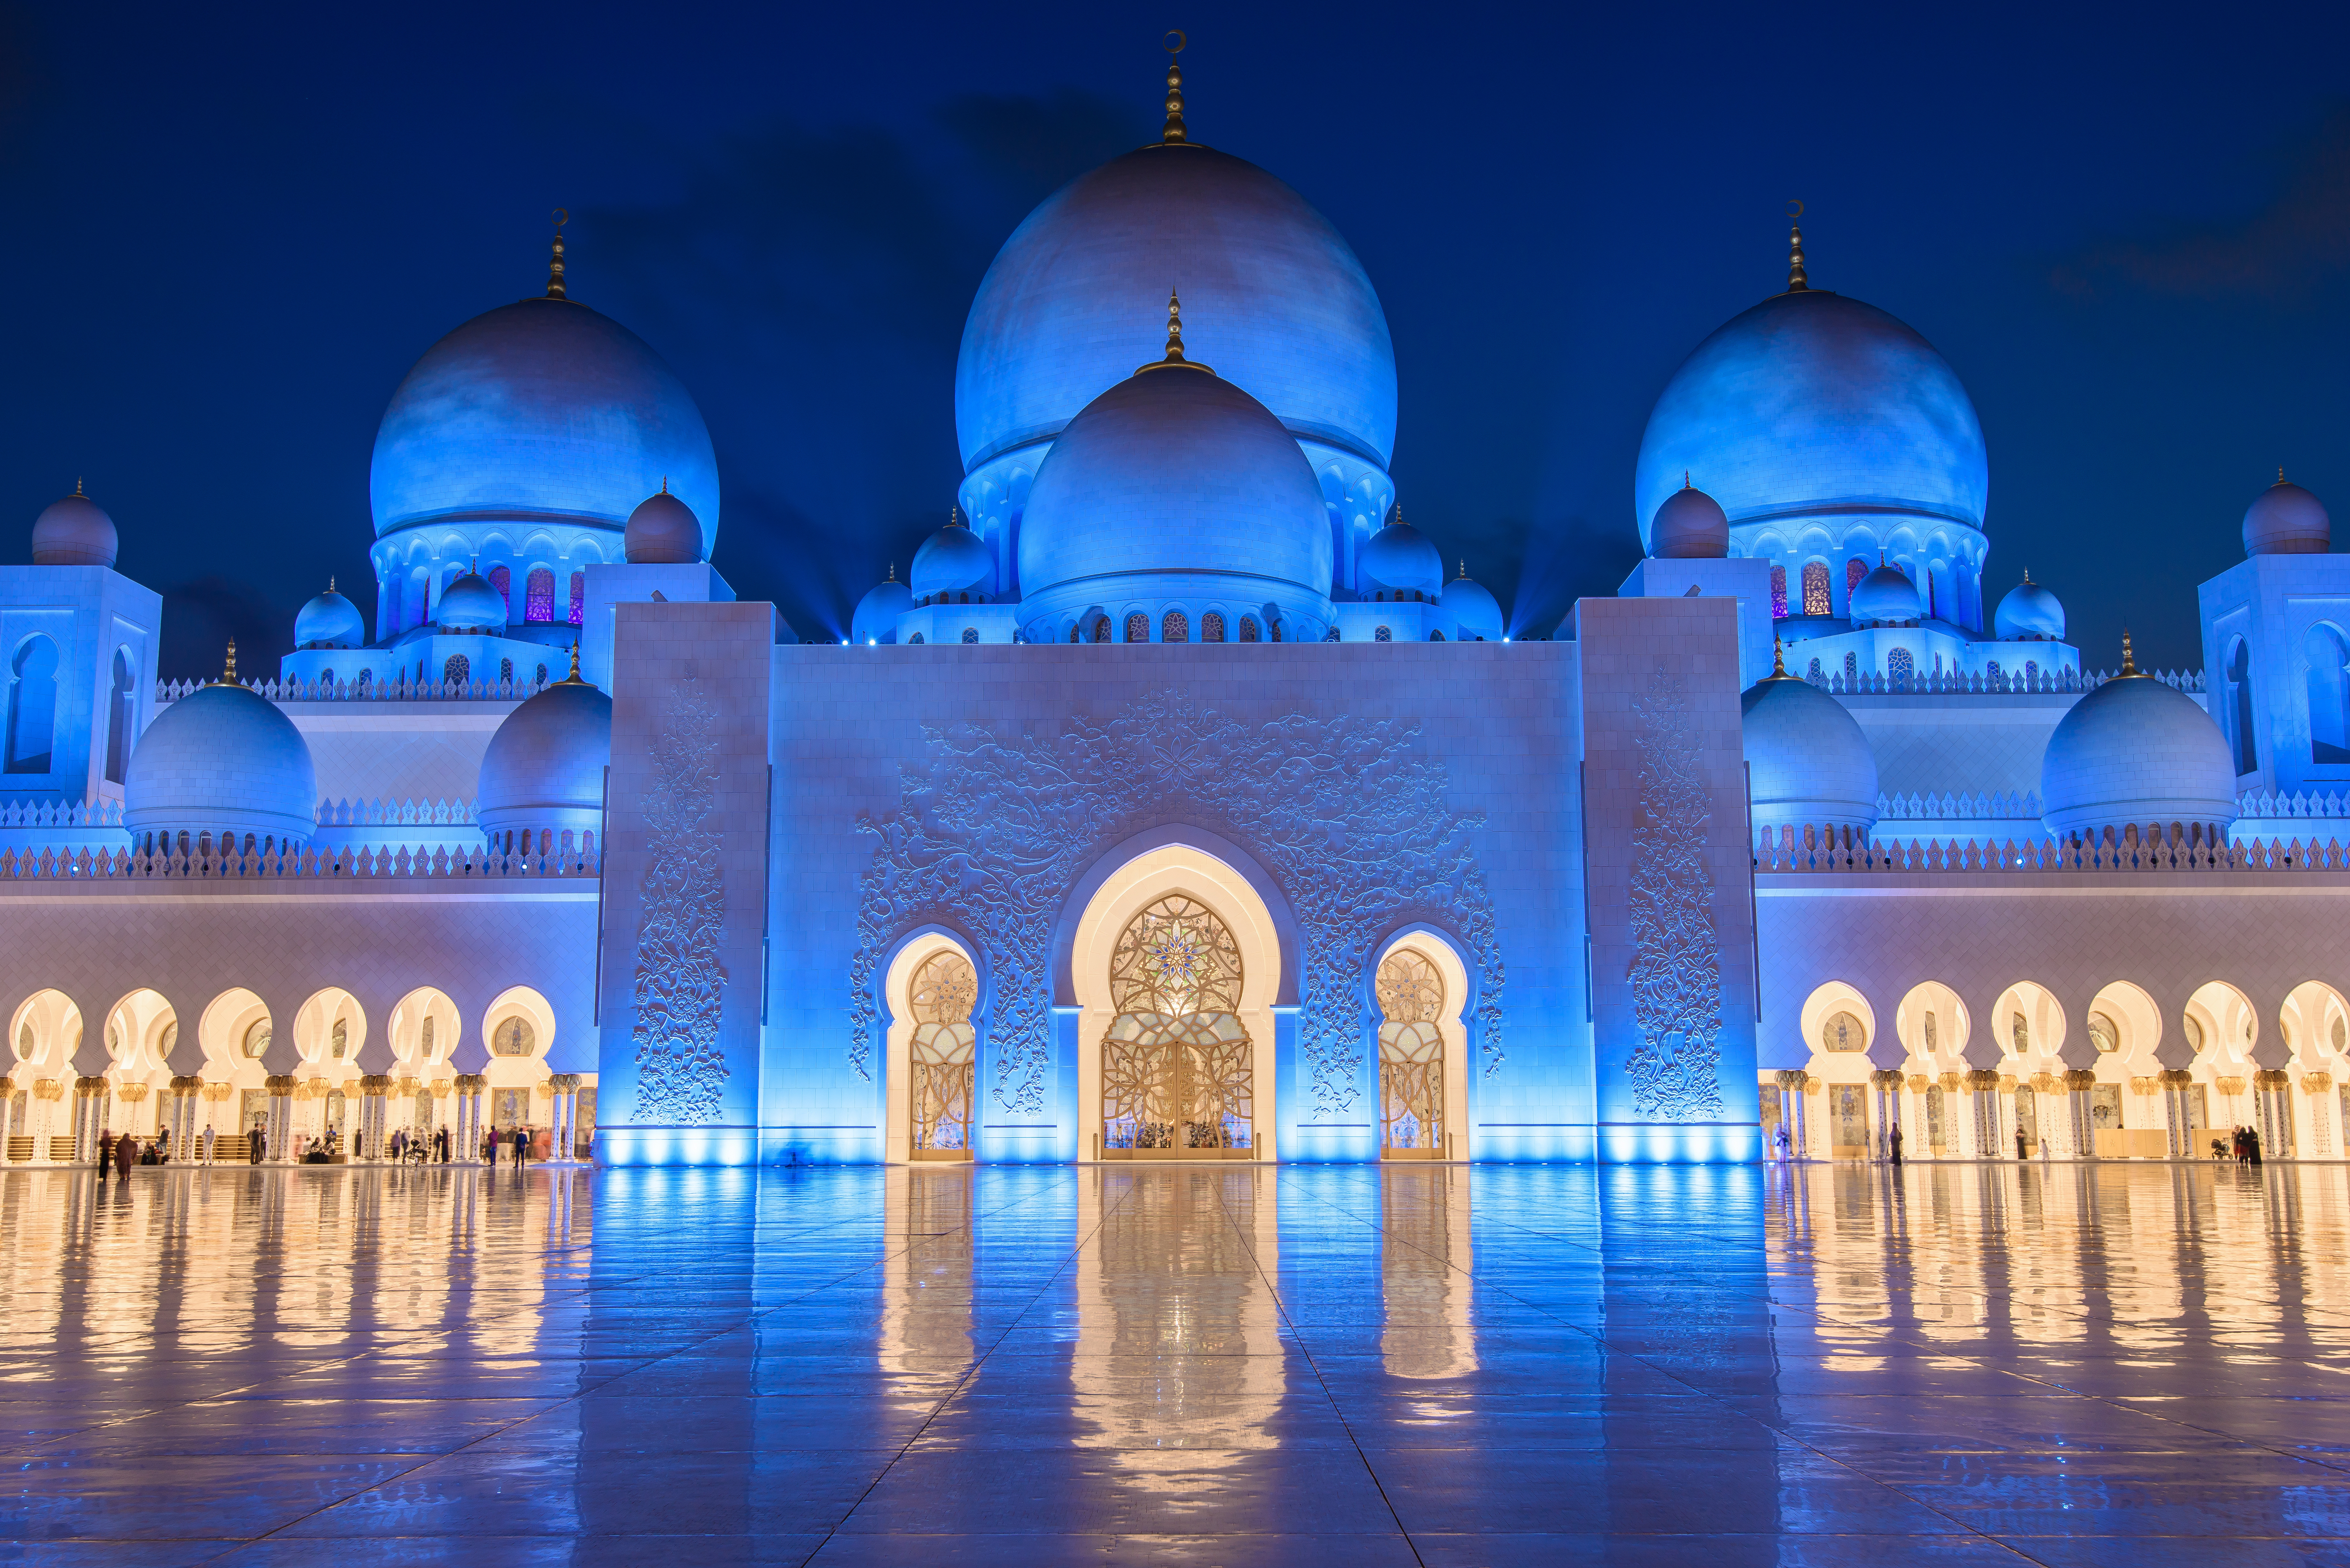 Abu Dhabi Architecture Dome Mosque Night Sheikh Zayed Grand Mosque United Arab Emirates 7360x4912